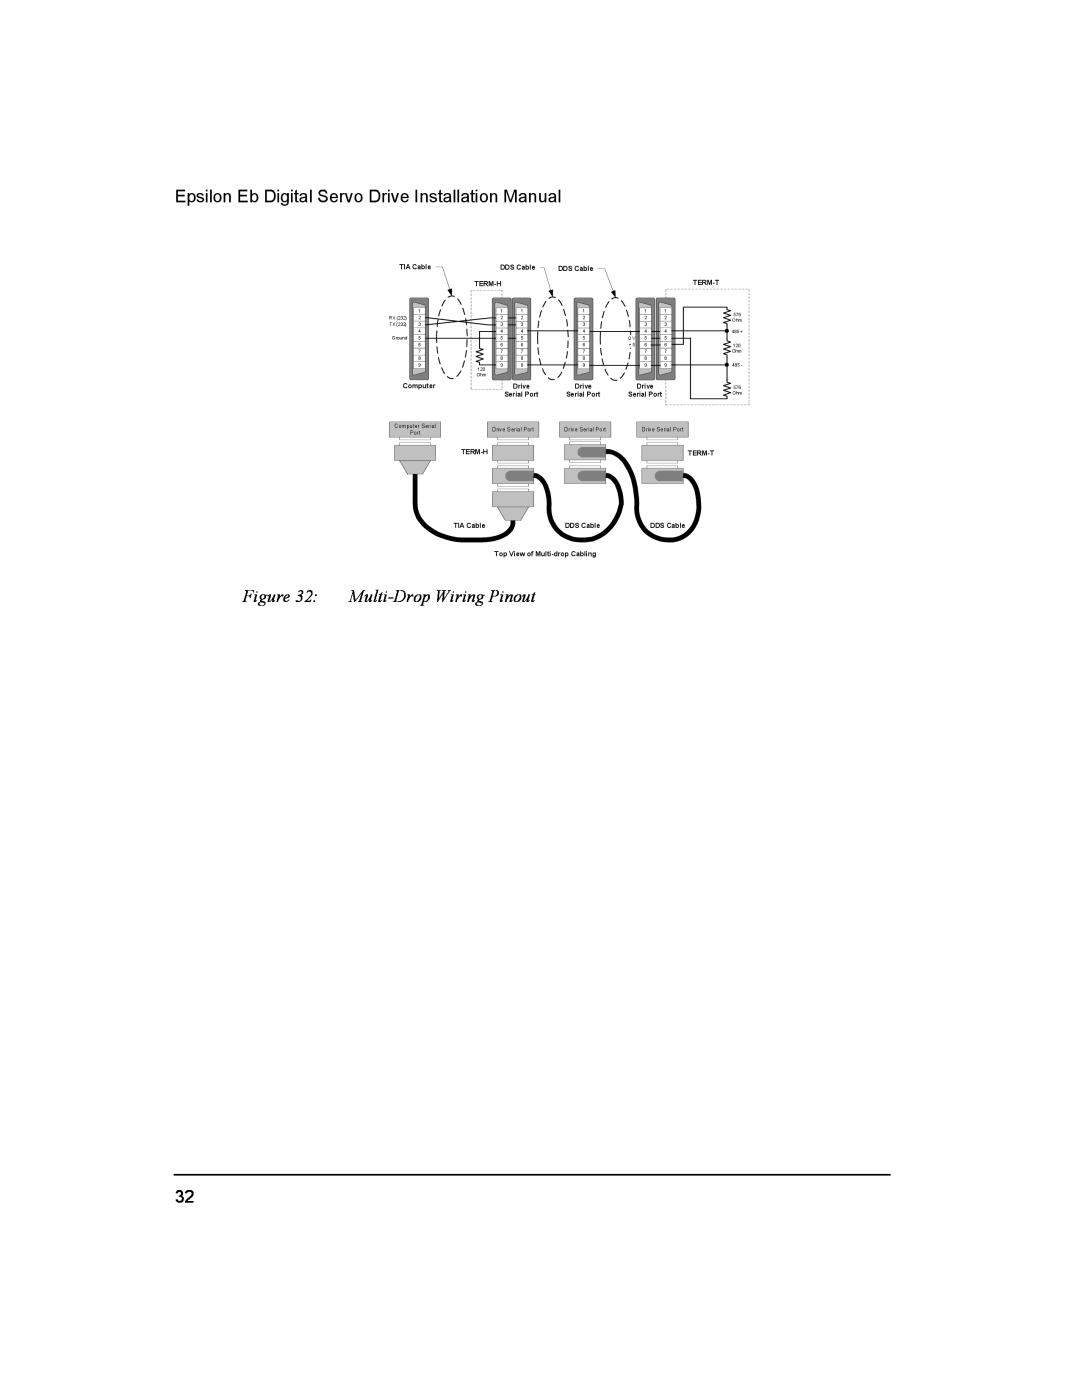 Emerson 400501-05 installation manual Multi-Drop Wiring Pinout, Epsilon Eb Digital Servo Drive Installation Manual 